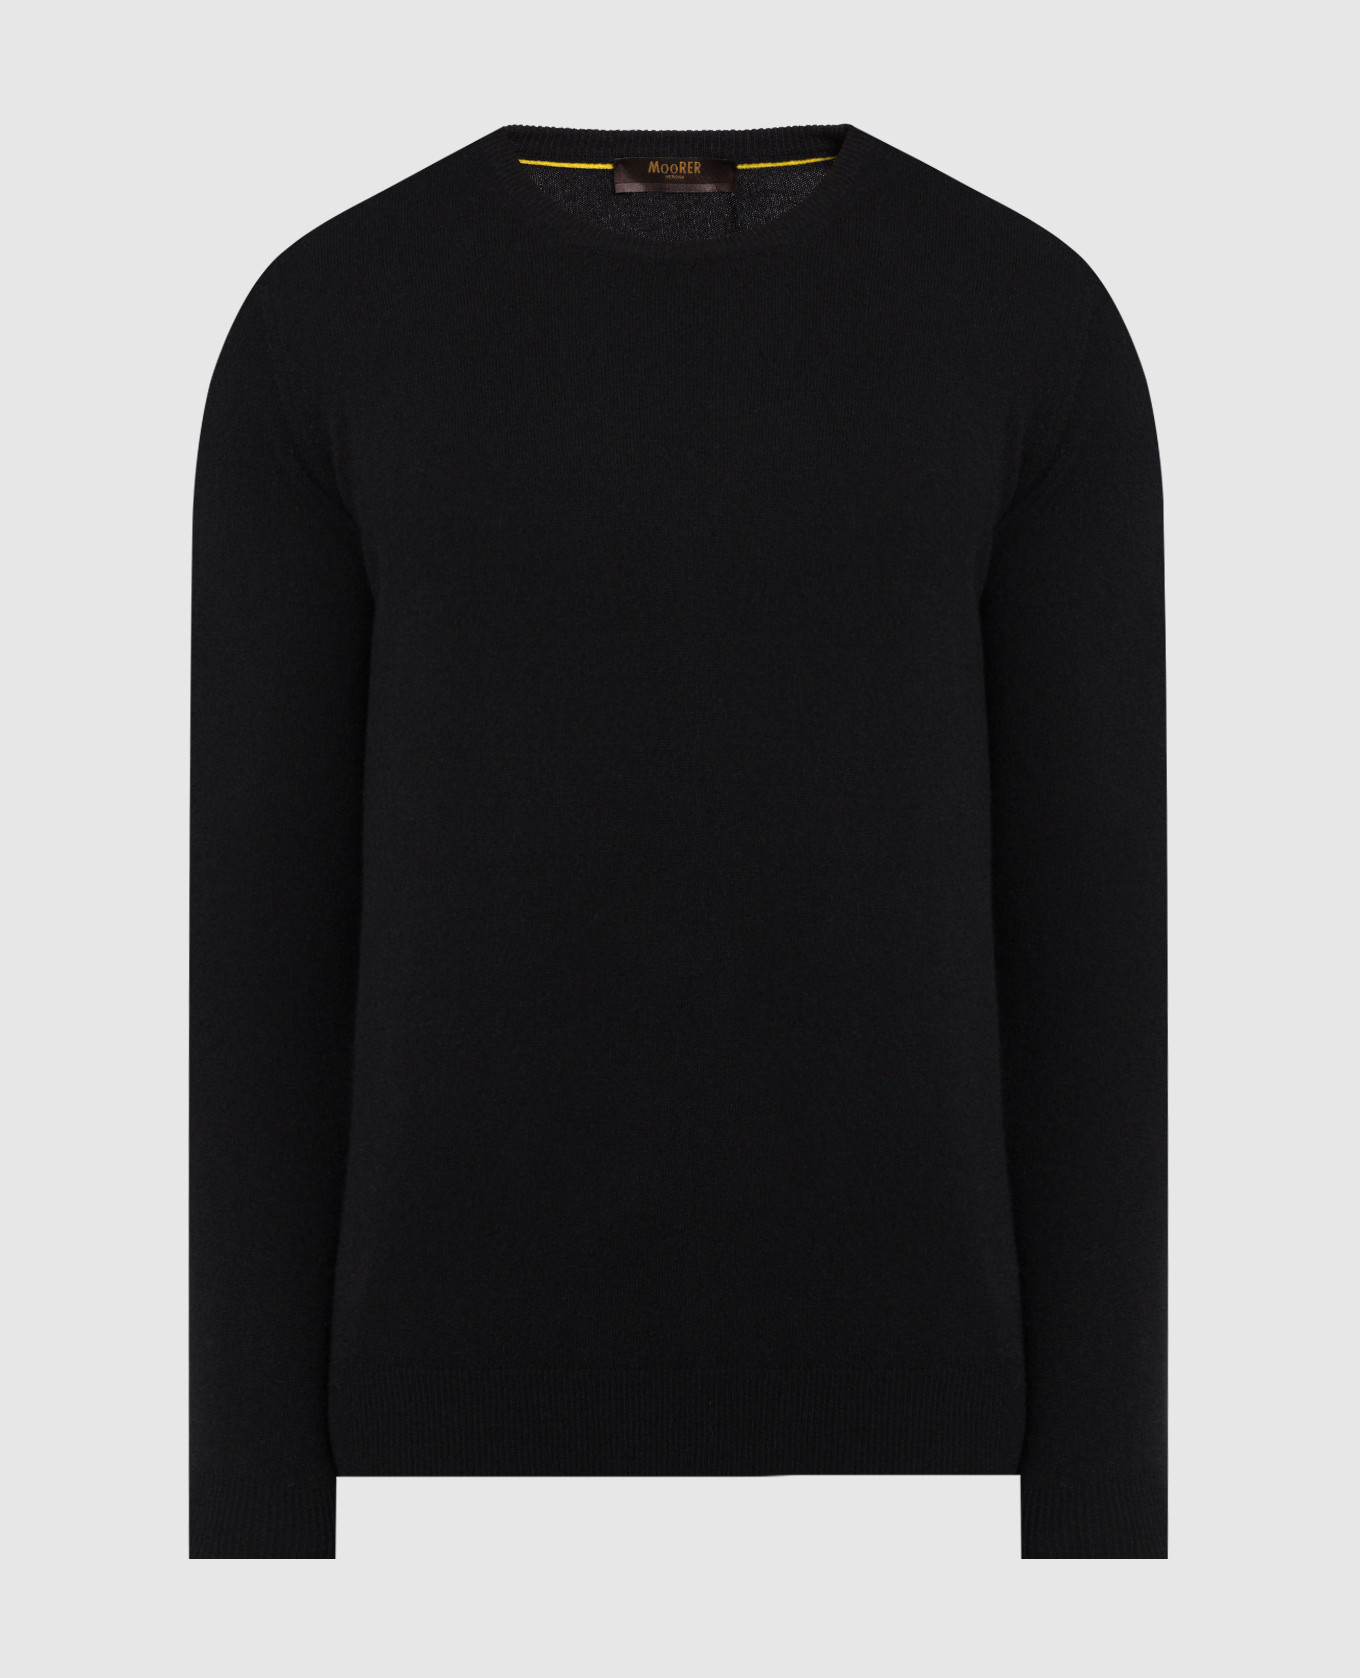 Orvieto black cashmere jumper